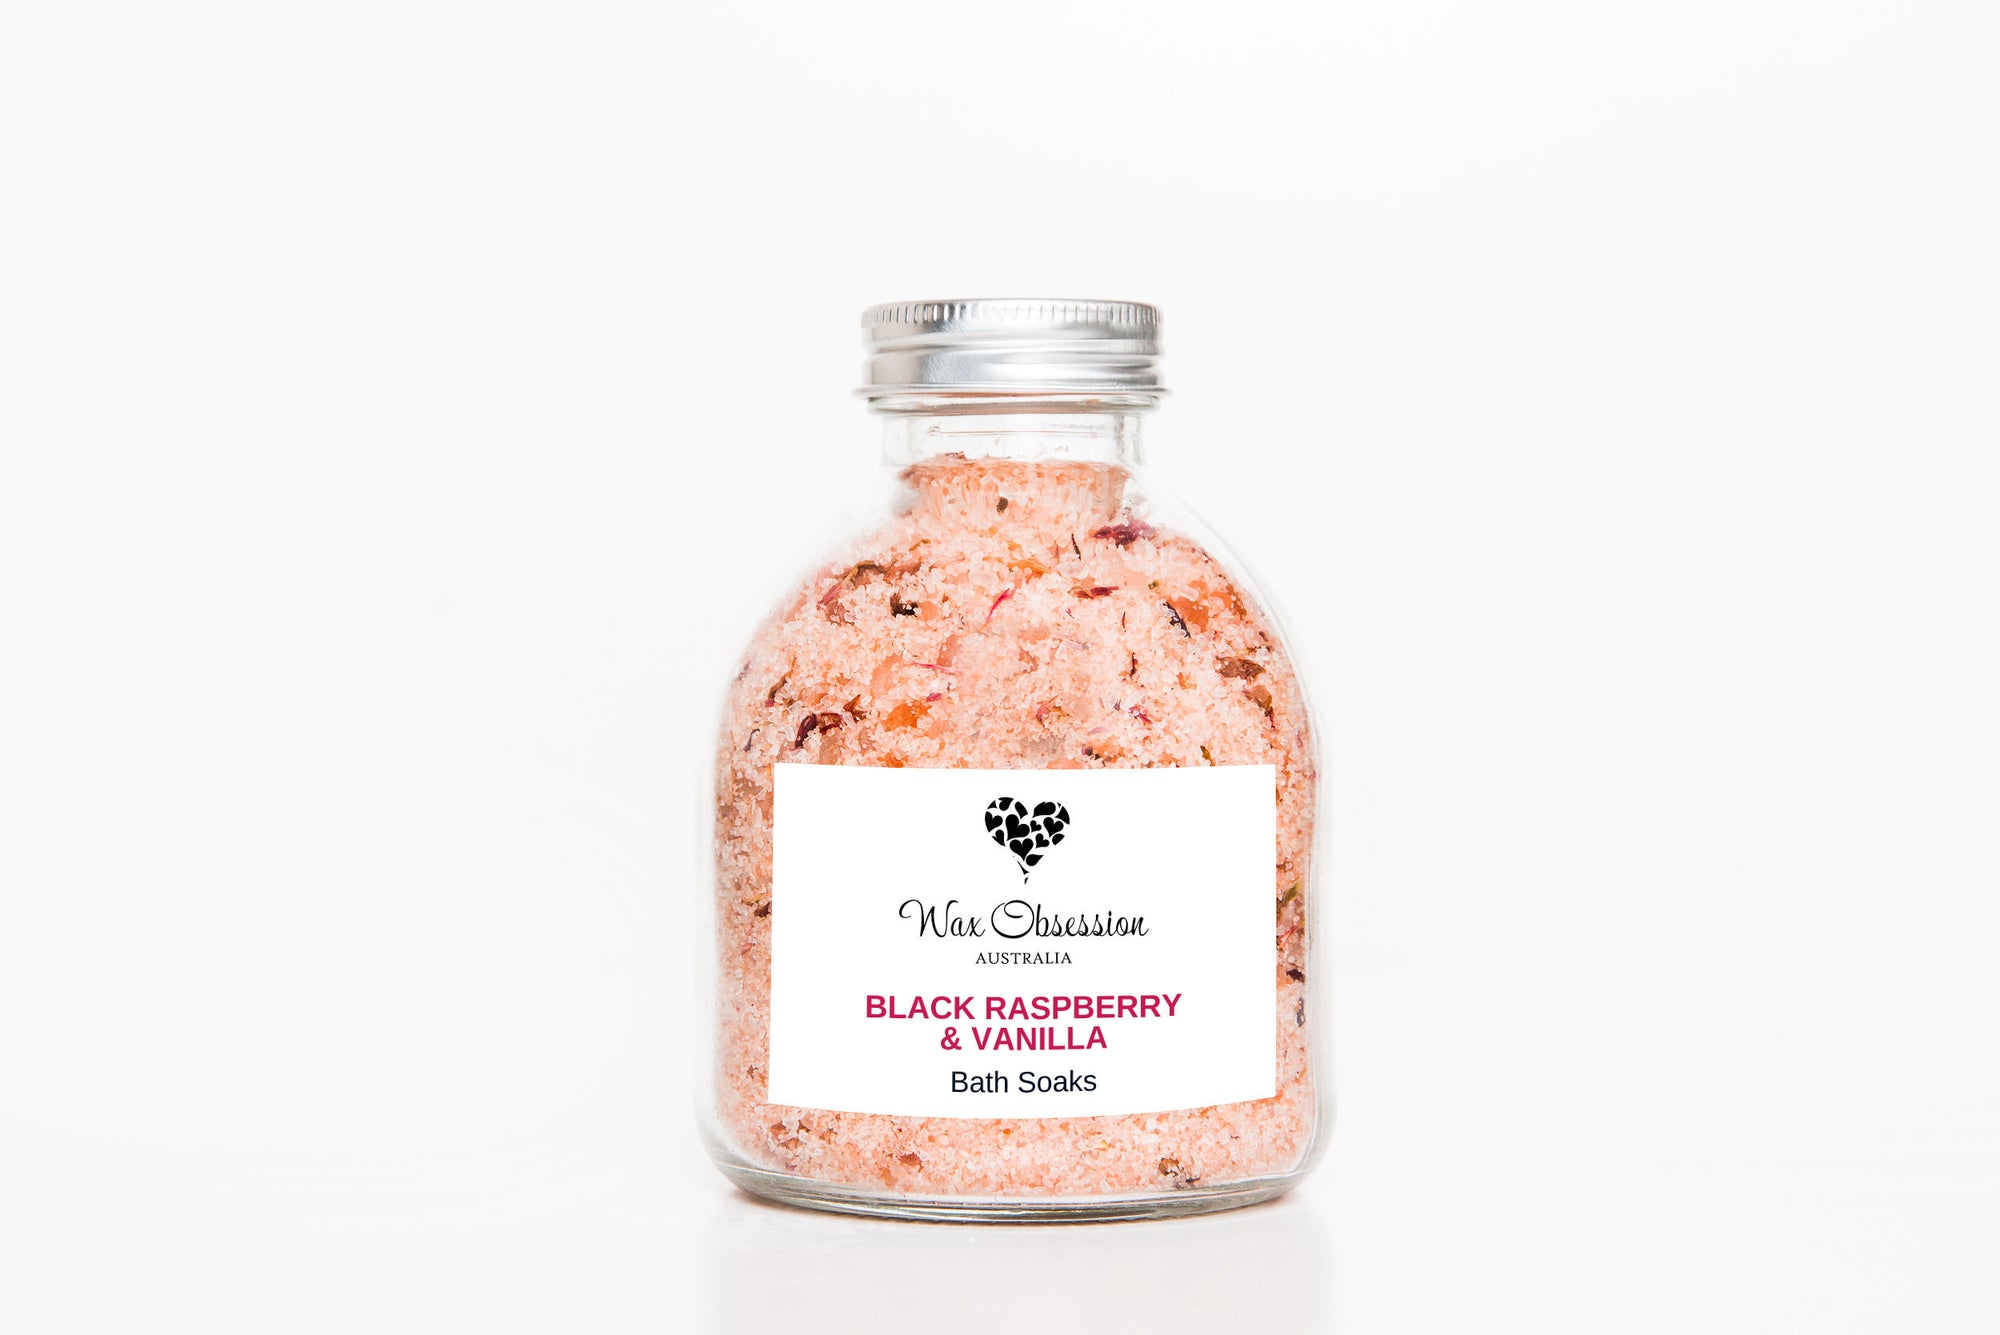 Bath Soaks - Black Raspberry & Vanilla